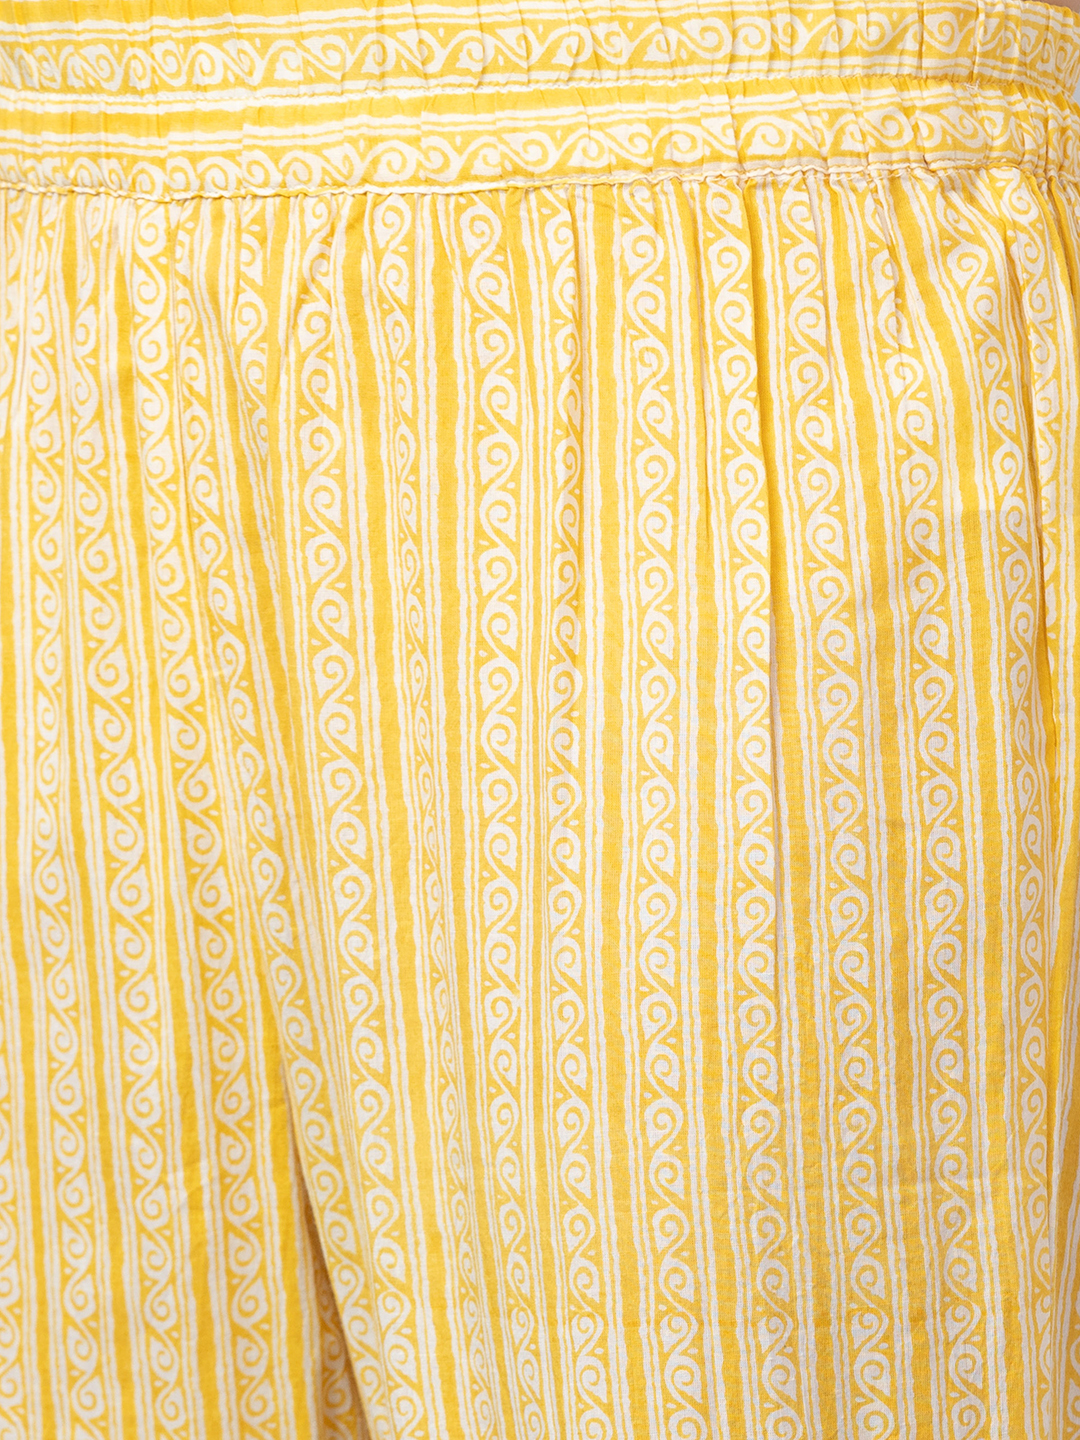 Globus Women Yellow Mandarin Collar Printed Kurta Set with Trouser